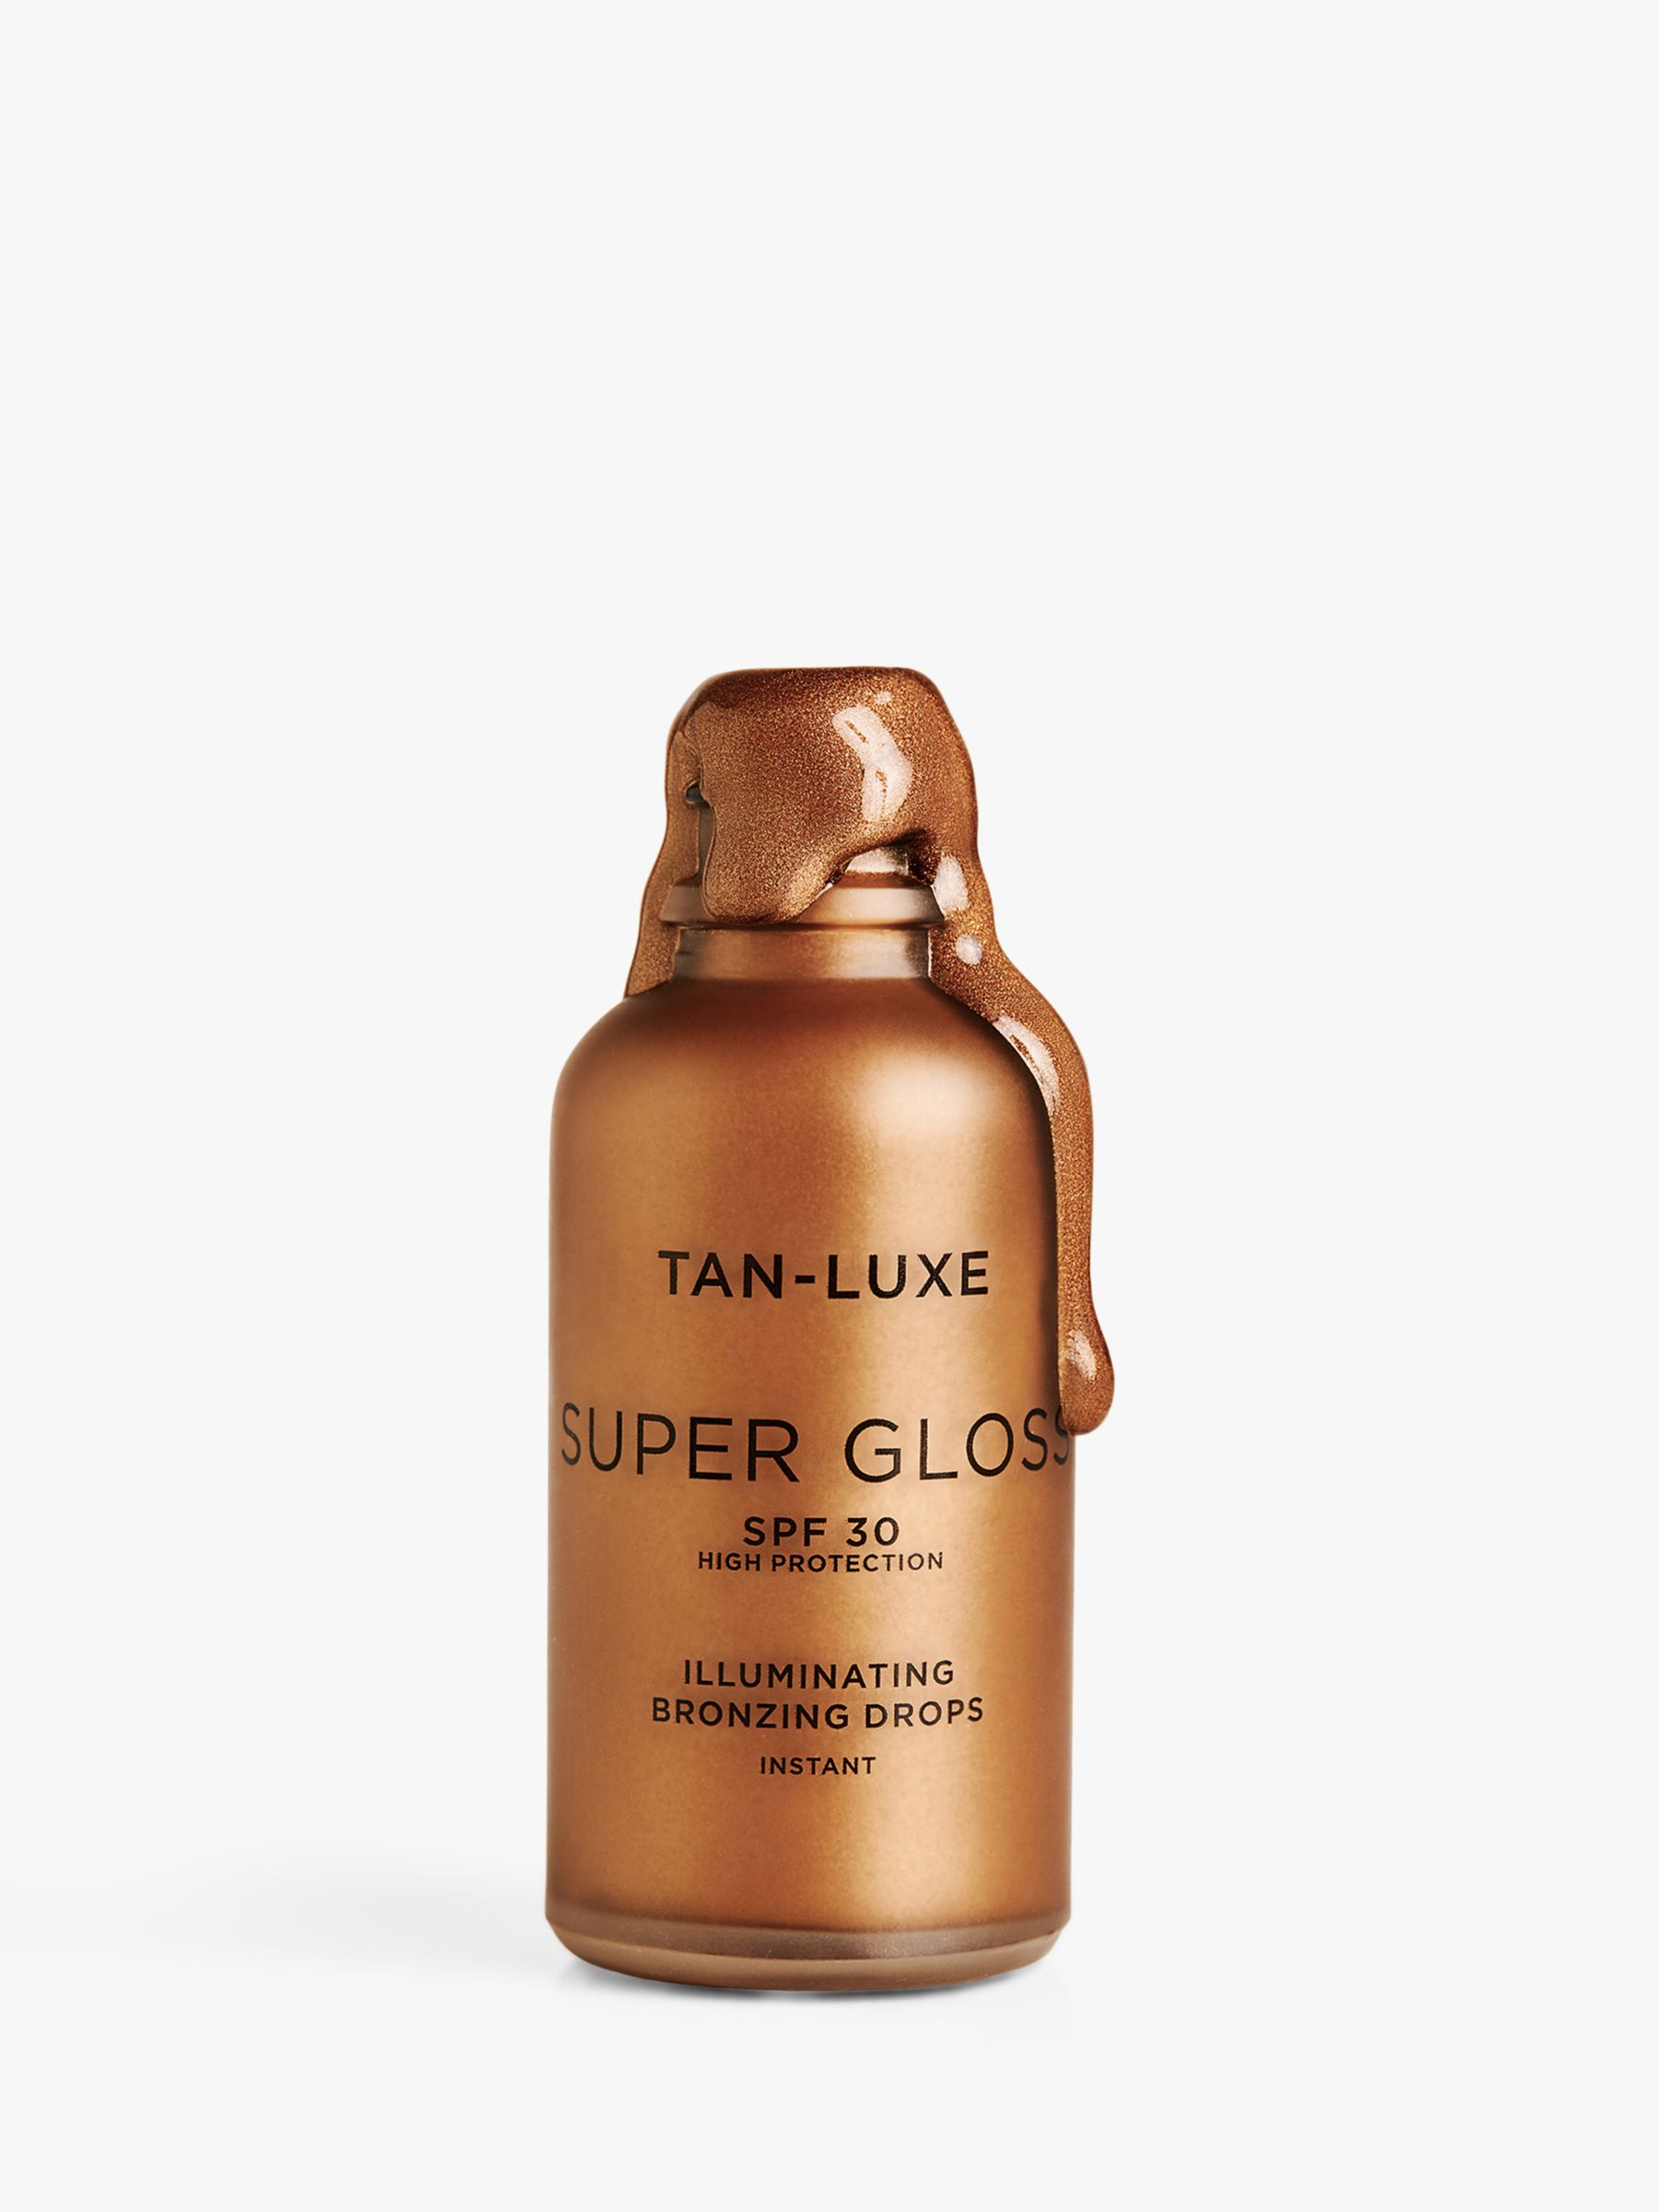 Tan-Luxe Super Gloss SPF 30 Illuminating Bronzing Drops, Instant, 30ml 2